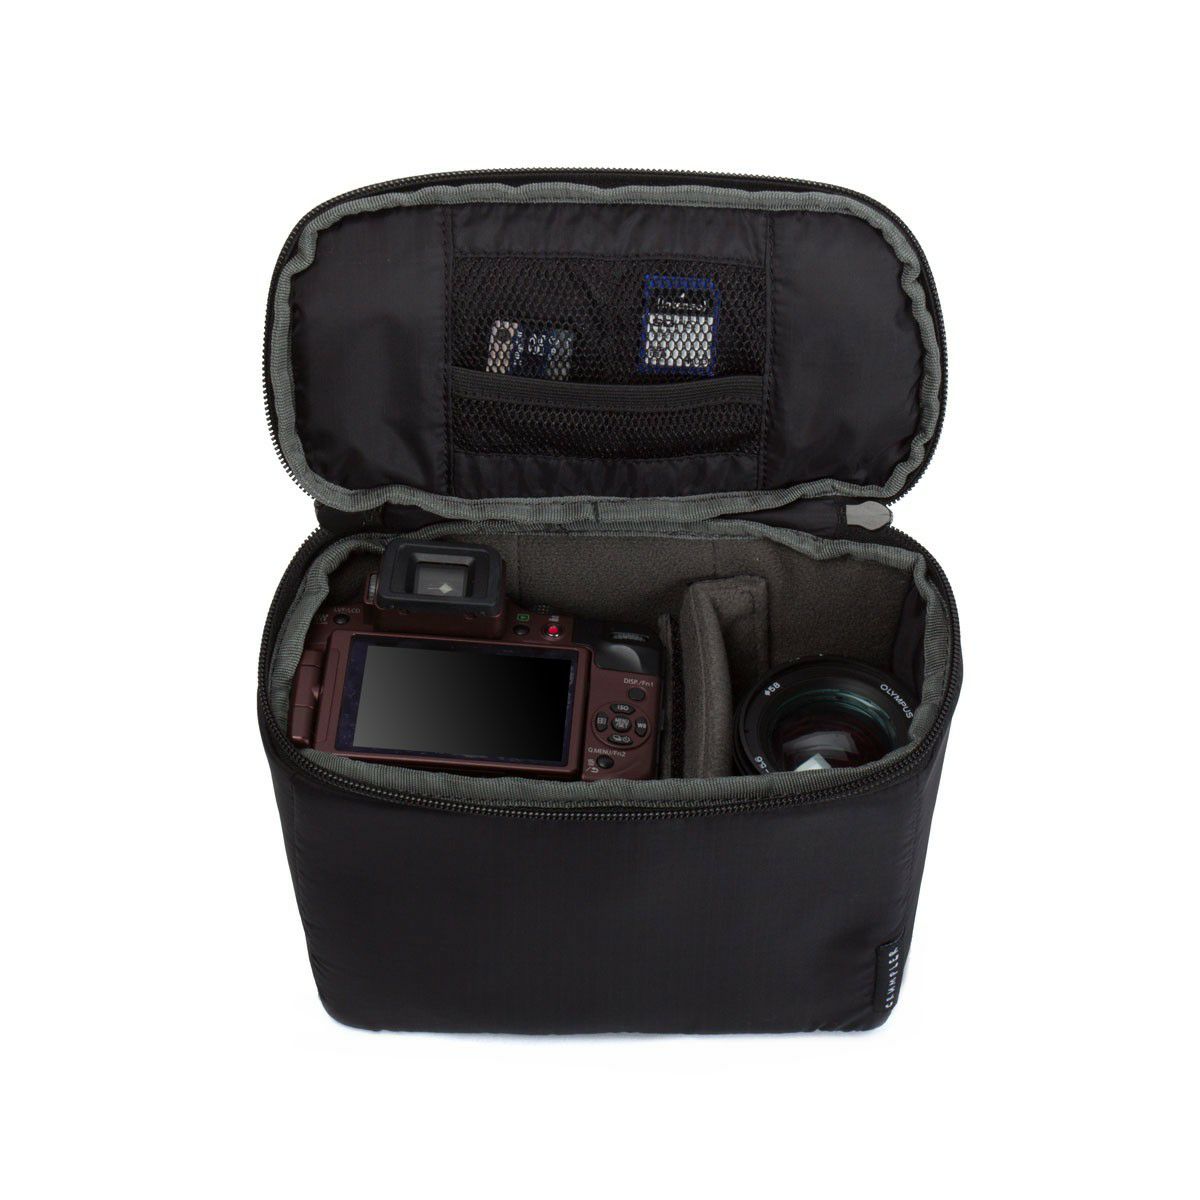 Crumpler The inlay Zip Pouch XS black TIZP-XS-001 camera accessories - internal unit